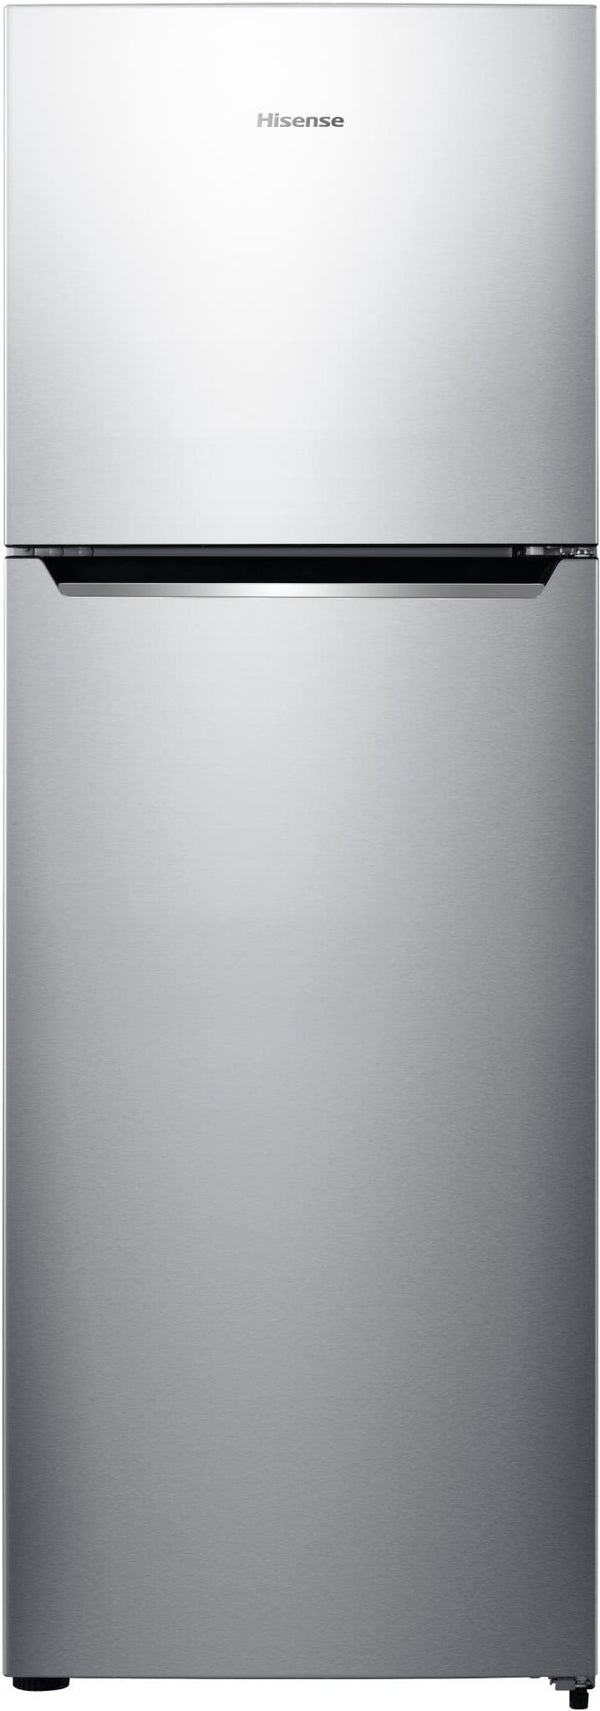  Hisense 326l top mount fridge (s/less steel)